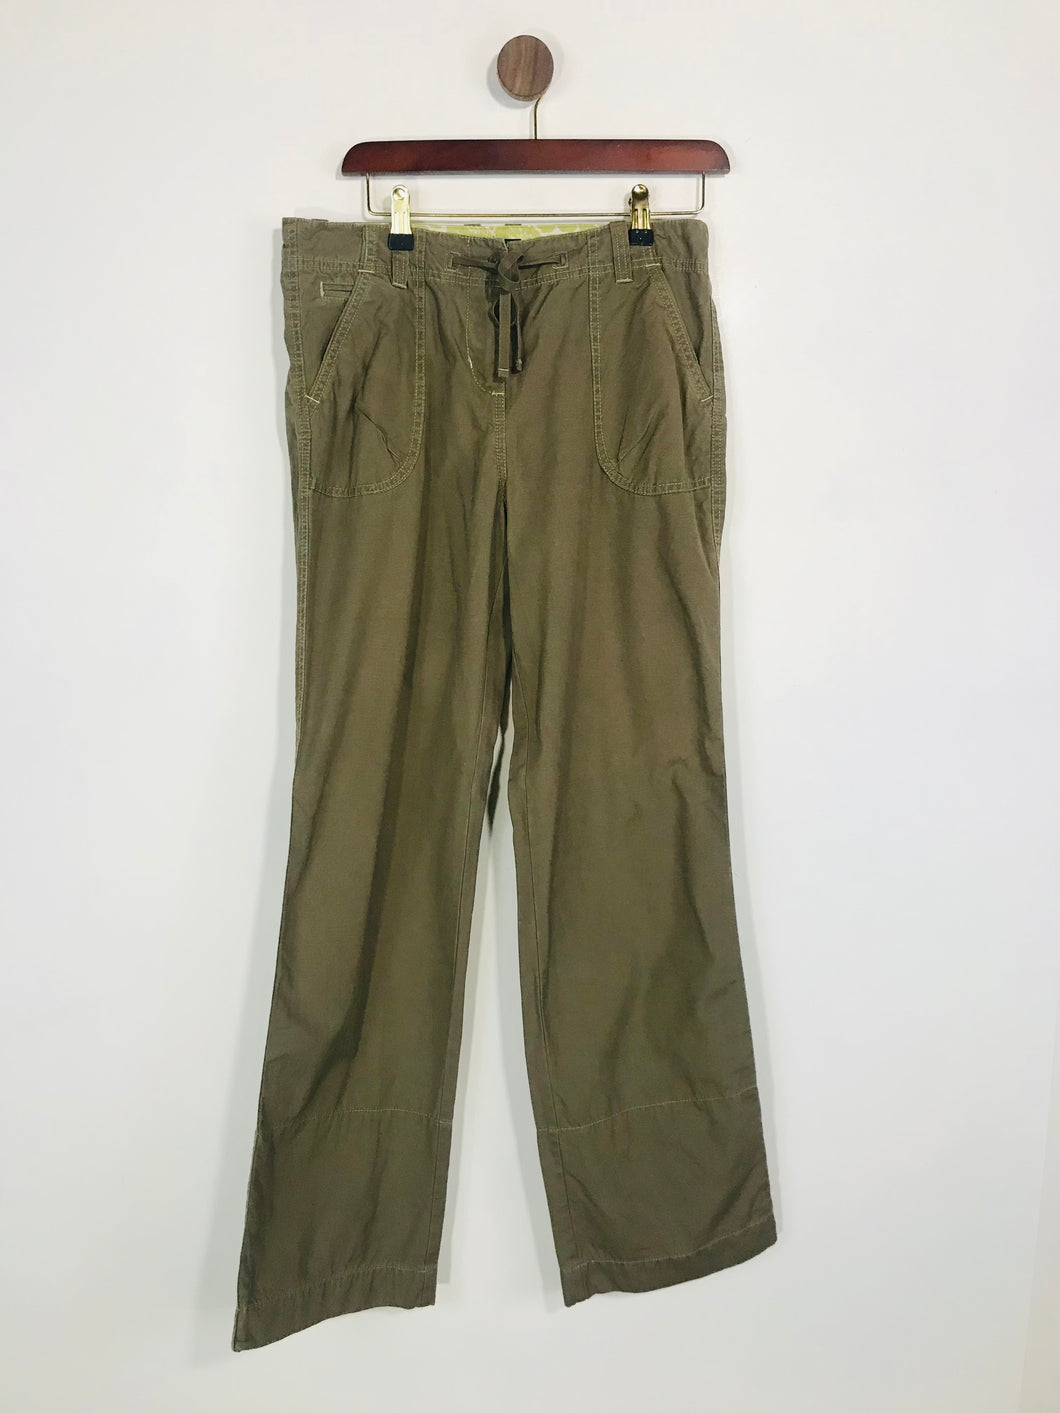 Boden Women's Cargo Casual Trousers | UK10 | Green